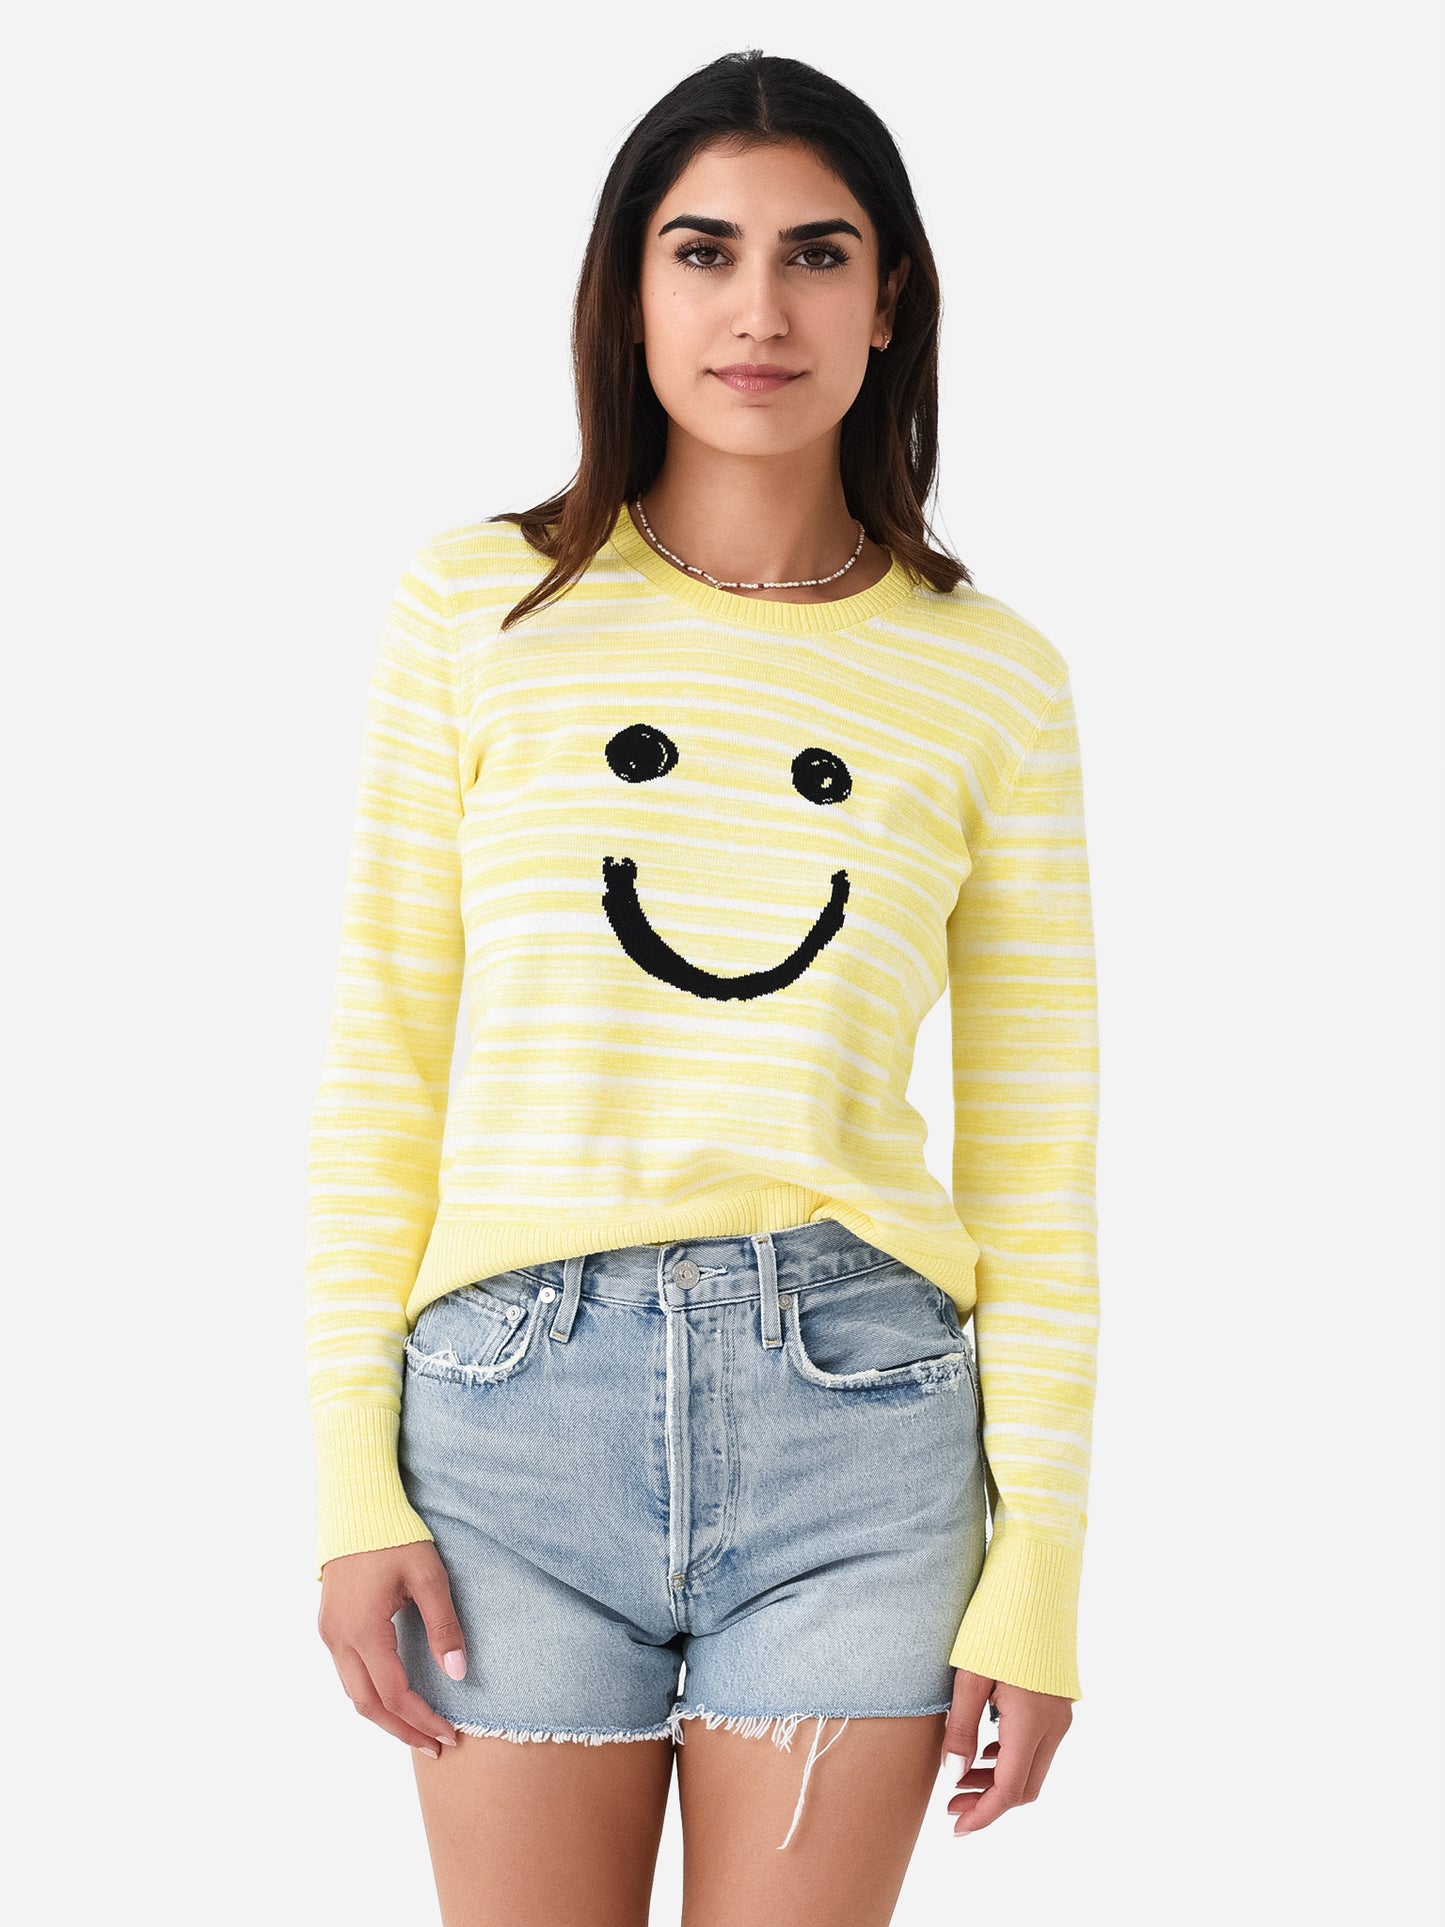 Kerri Rosenthal Women's Liz Striped Smiley Sweater